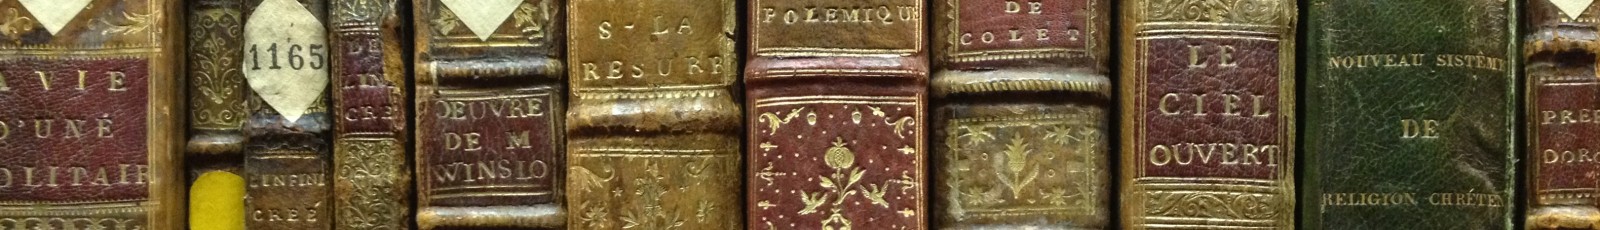 Clandestine philosophical manuscripts